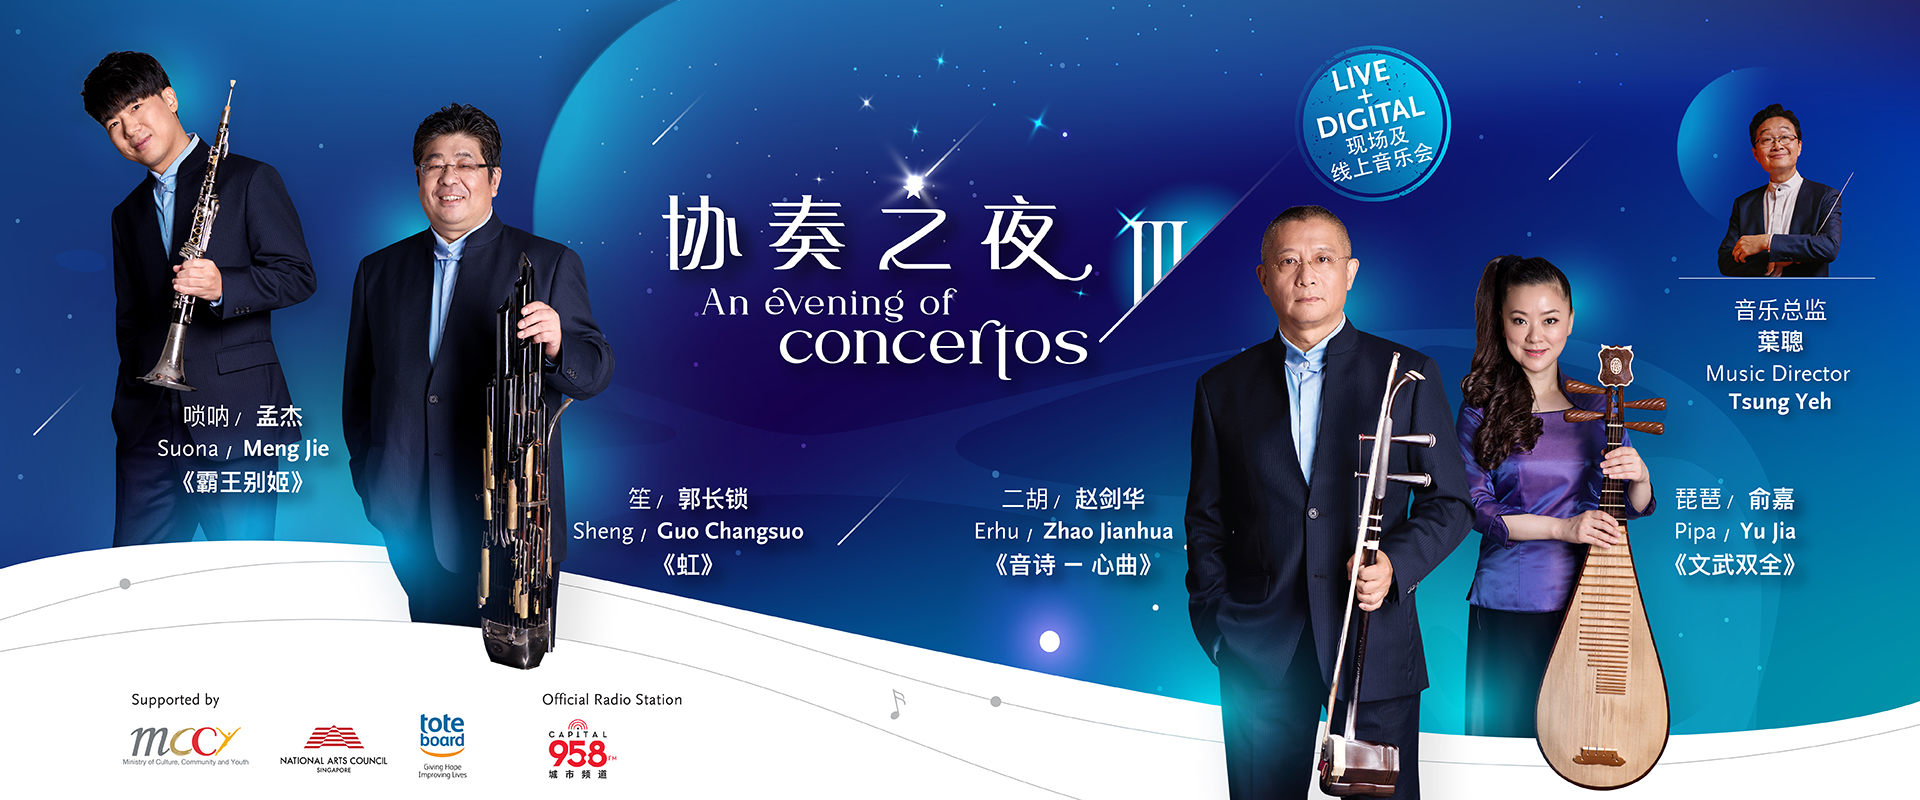 SCO_Concerto_3_Website_Desktop_1920x800 All Concerts and Events